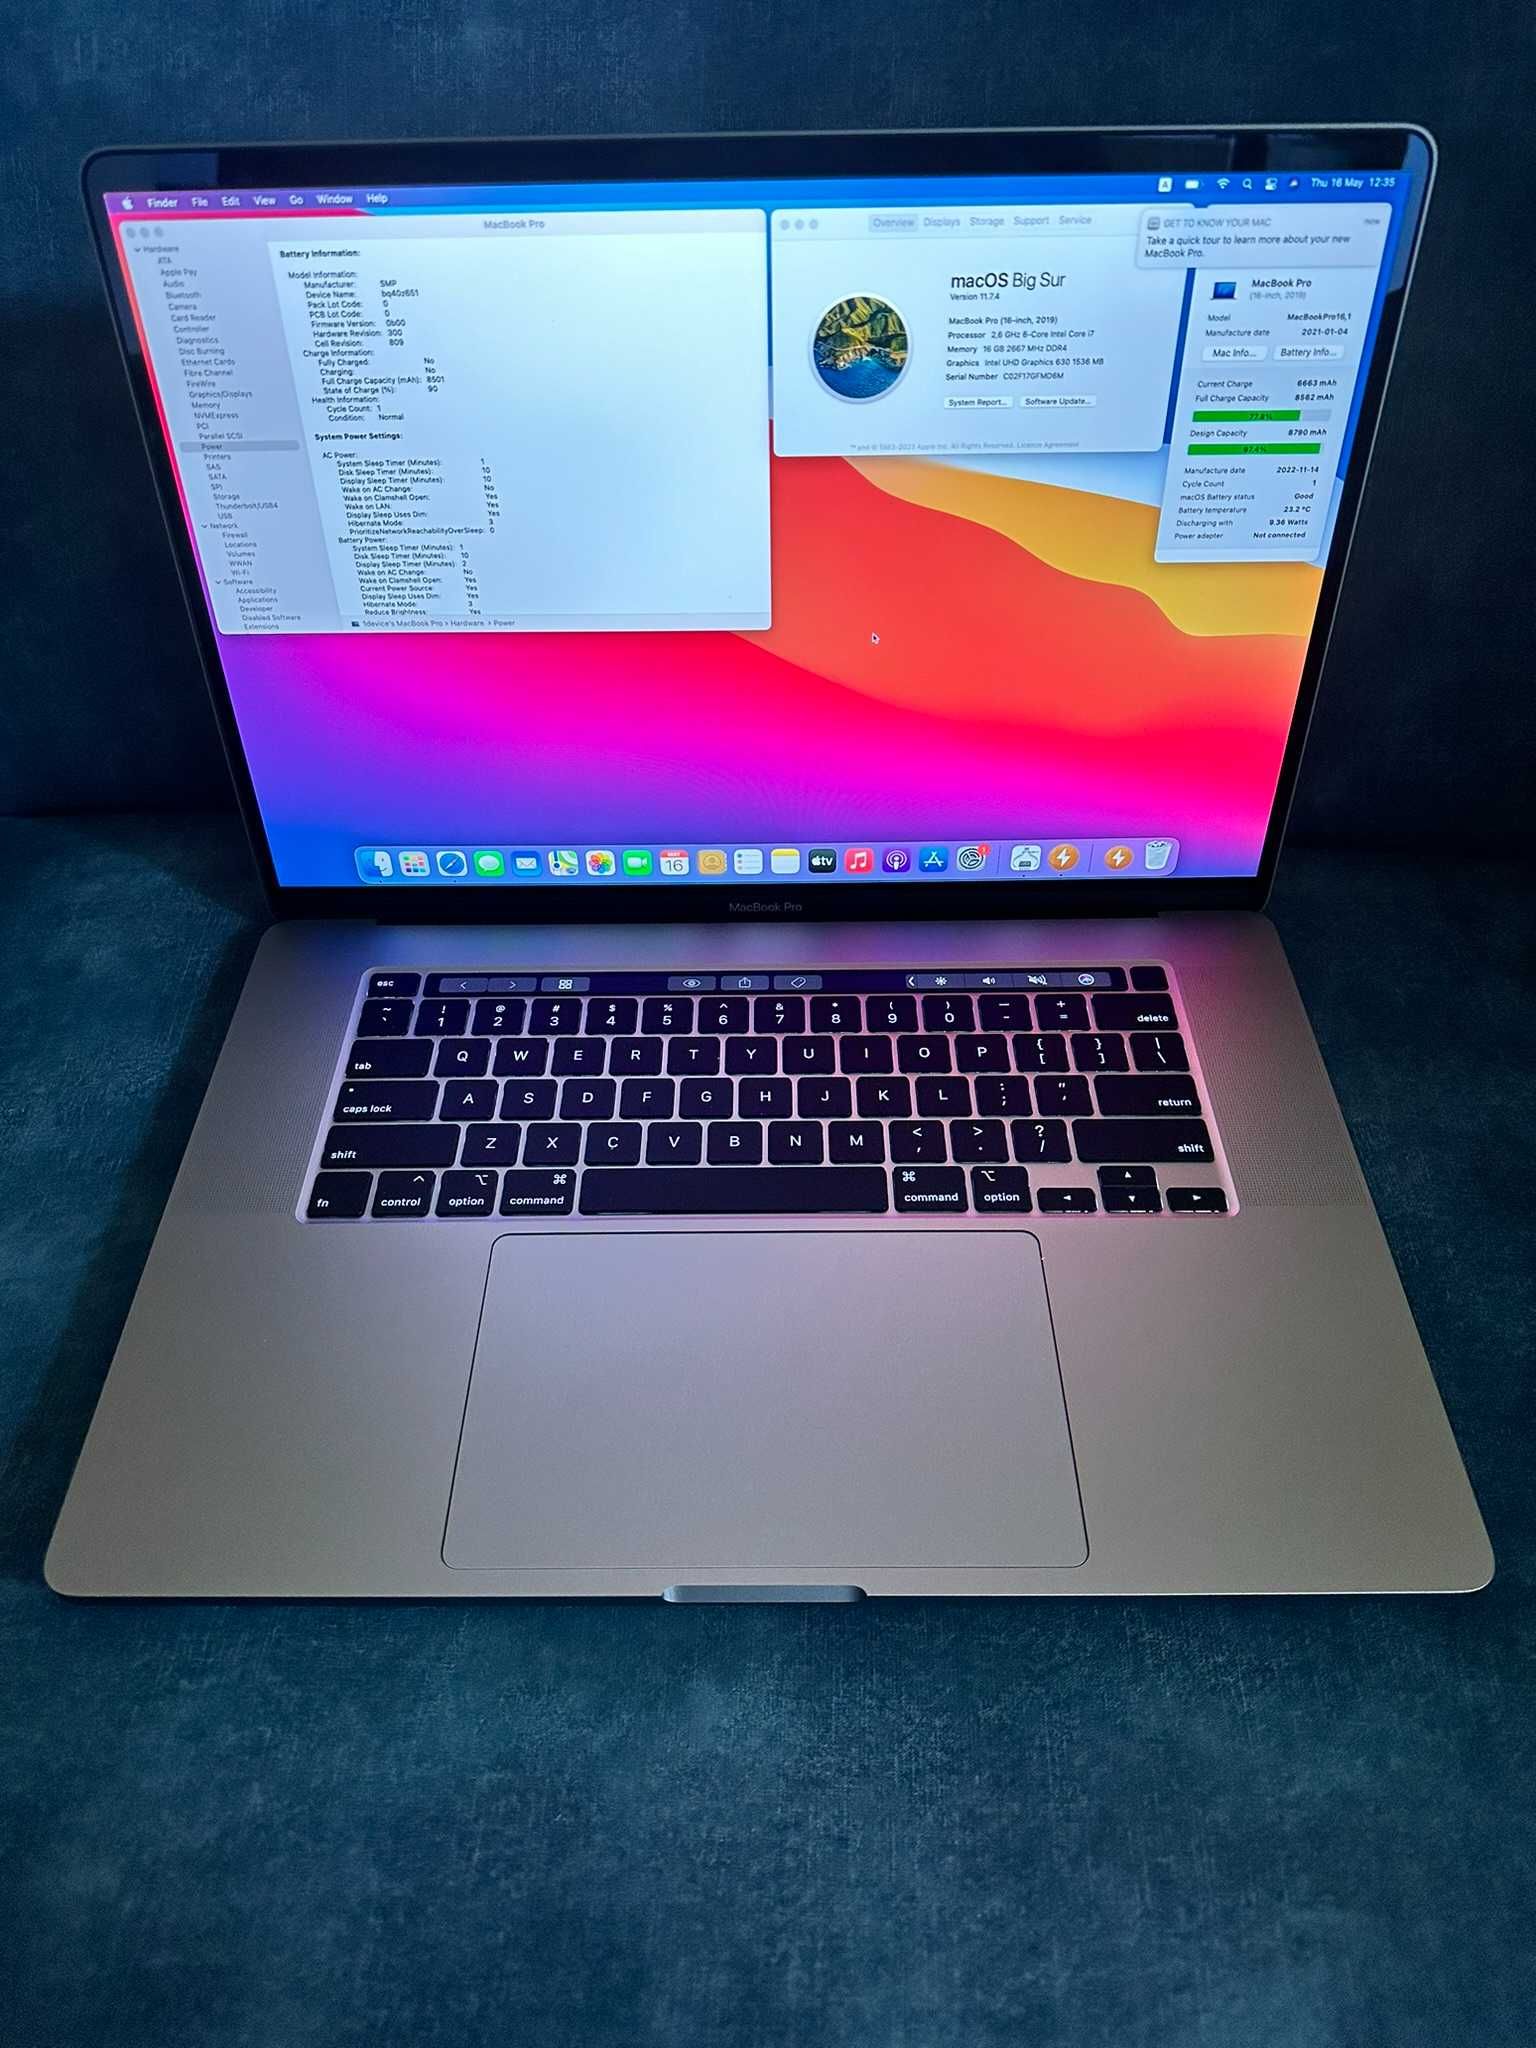 Like New! 2019 MacBook Pro 16” A2141 i7/16/512 Silver Нова АКБ 1 цикл